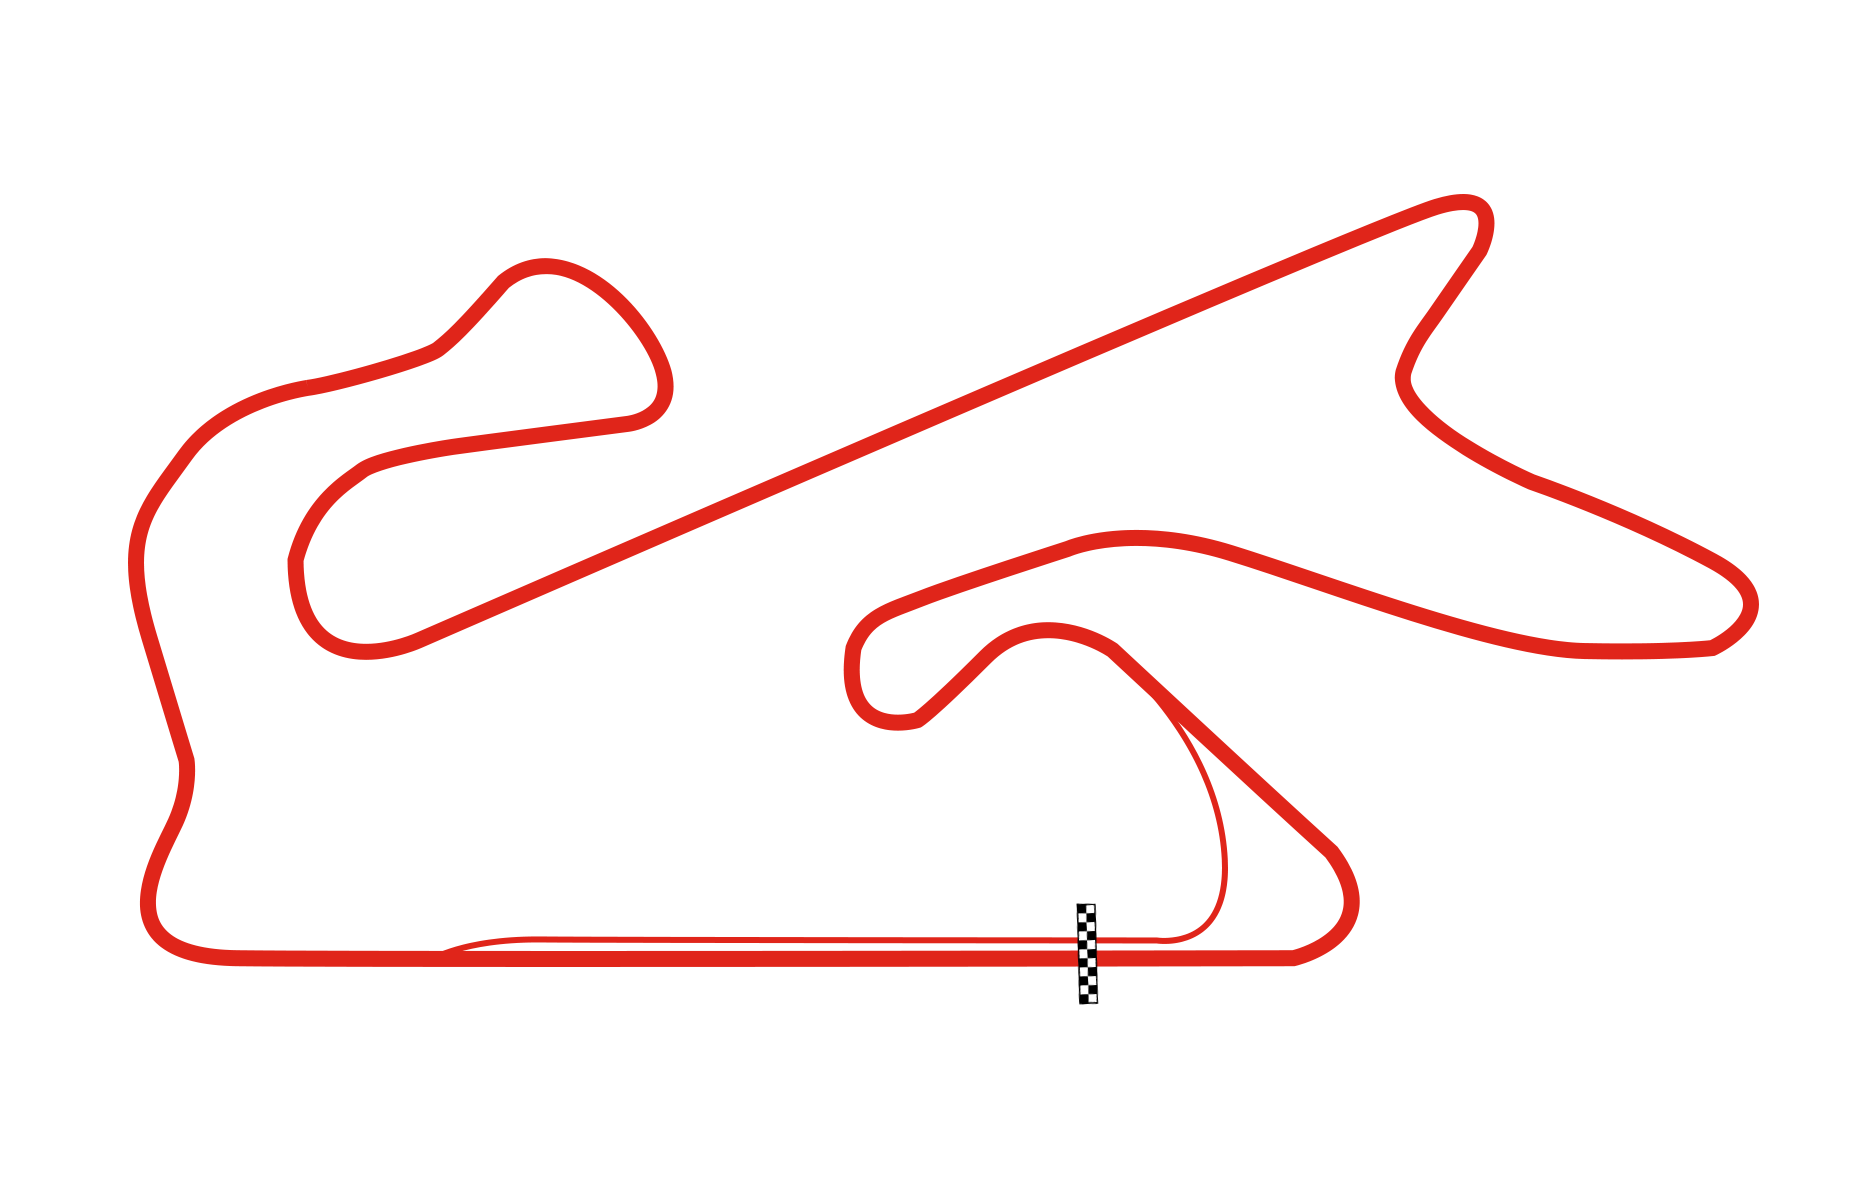 Autódromo do Estoril (Circuito Estoril)